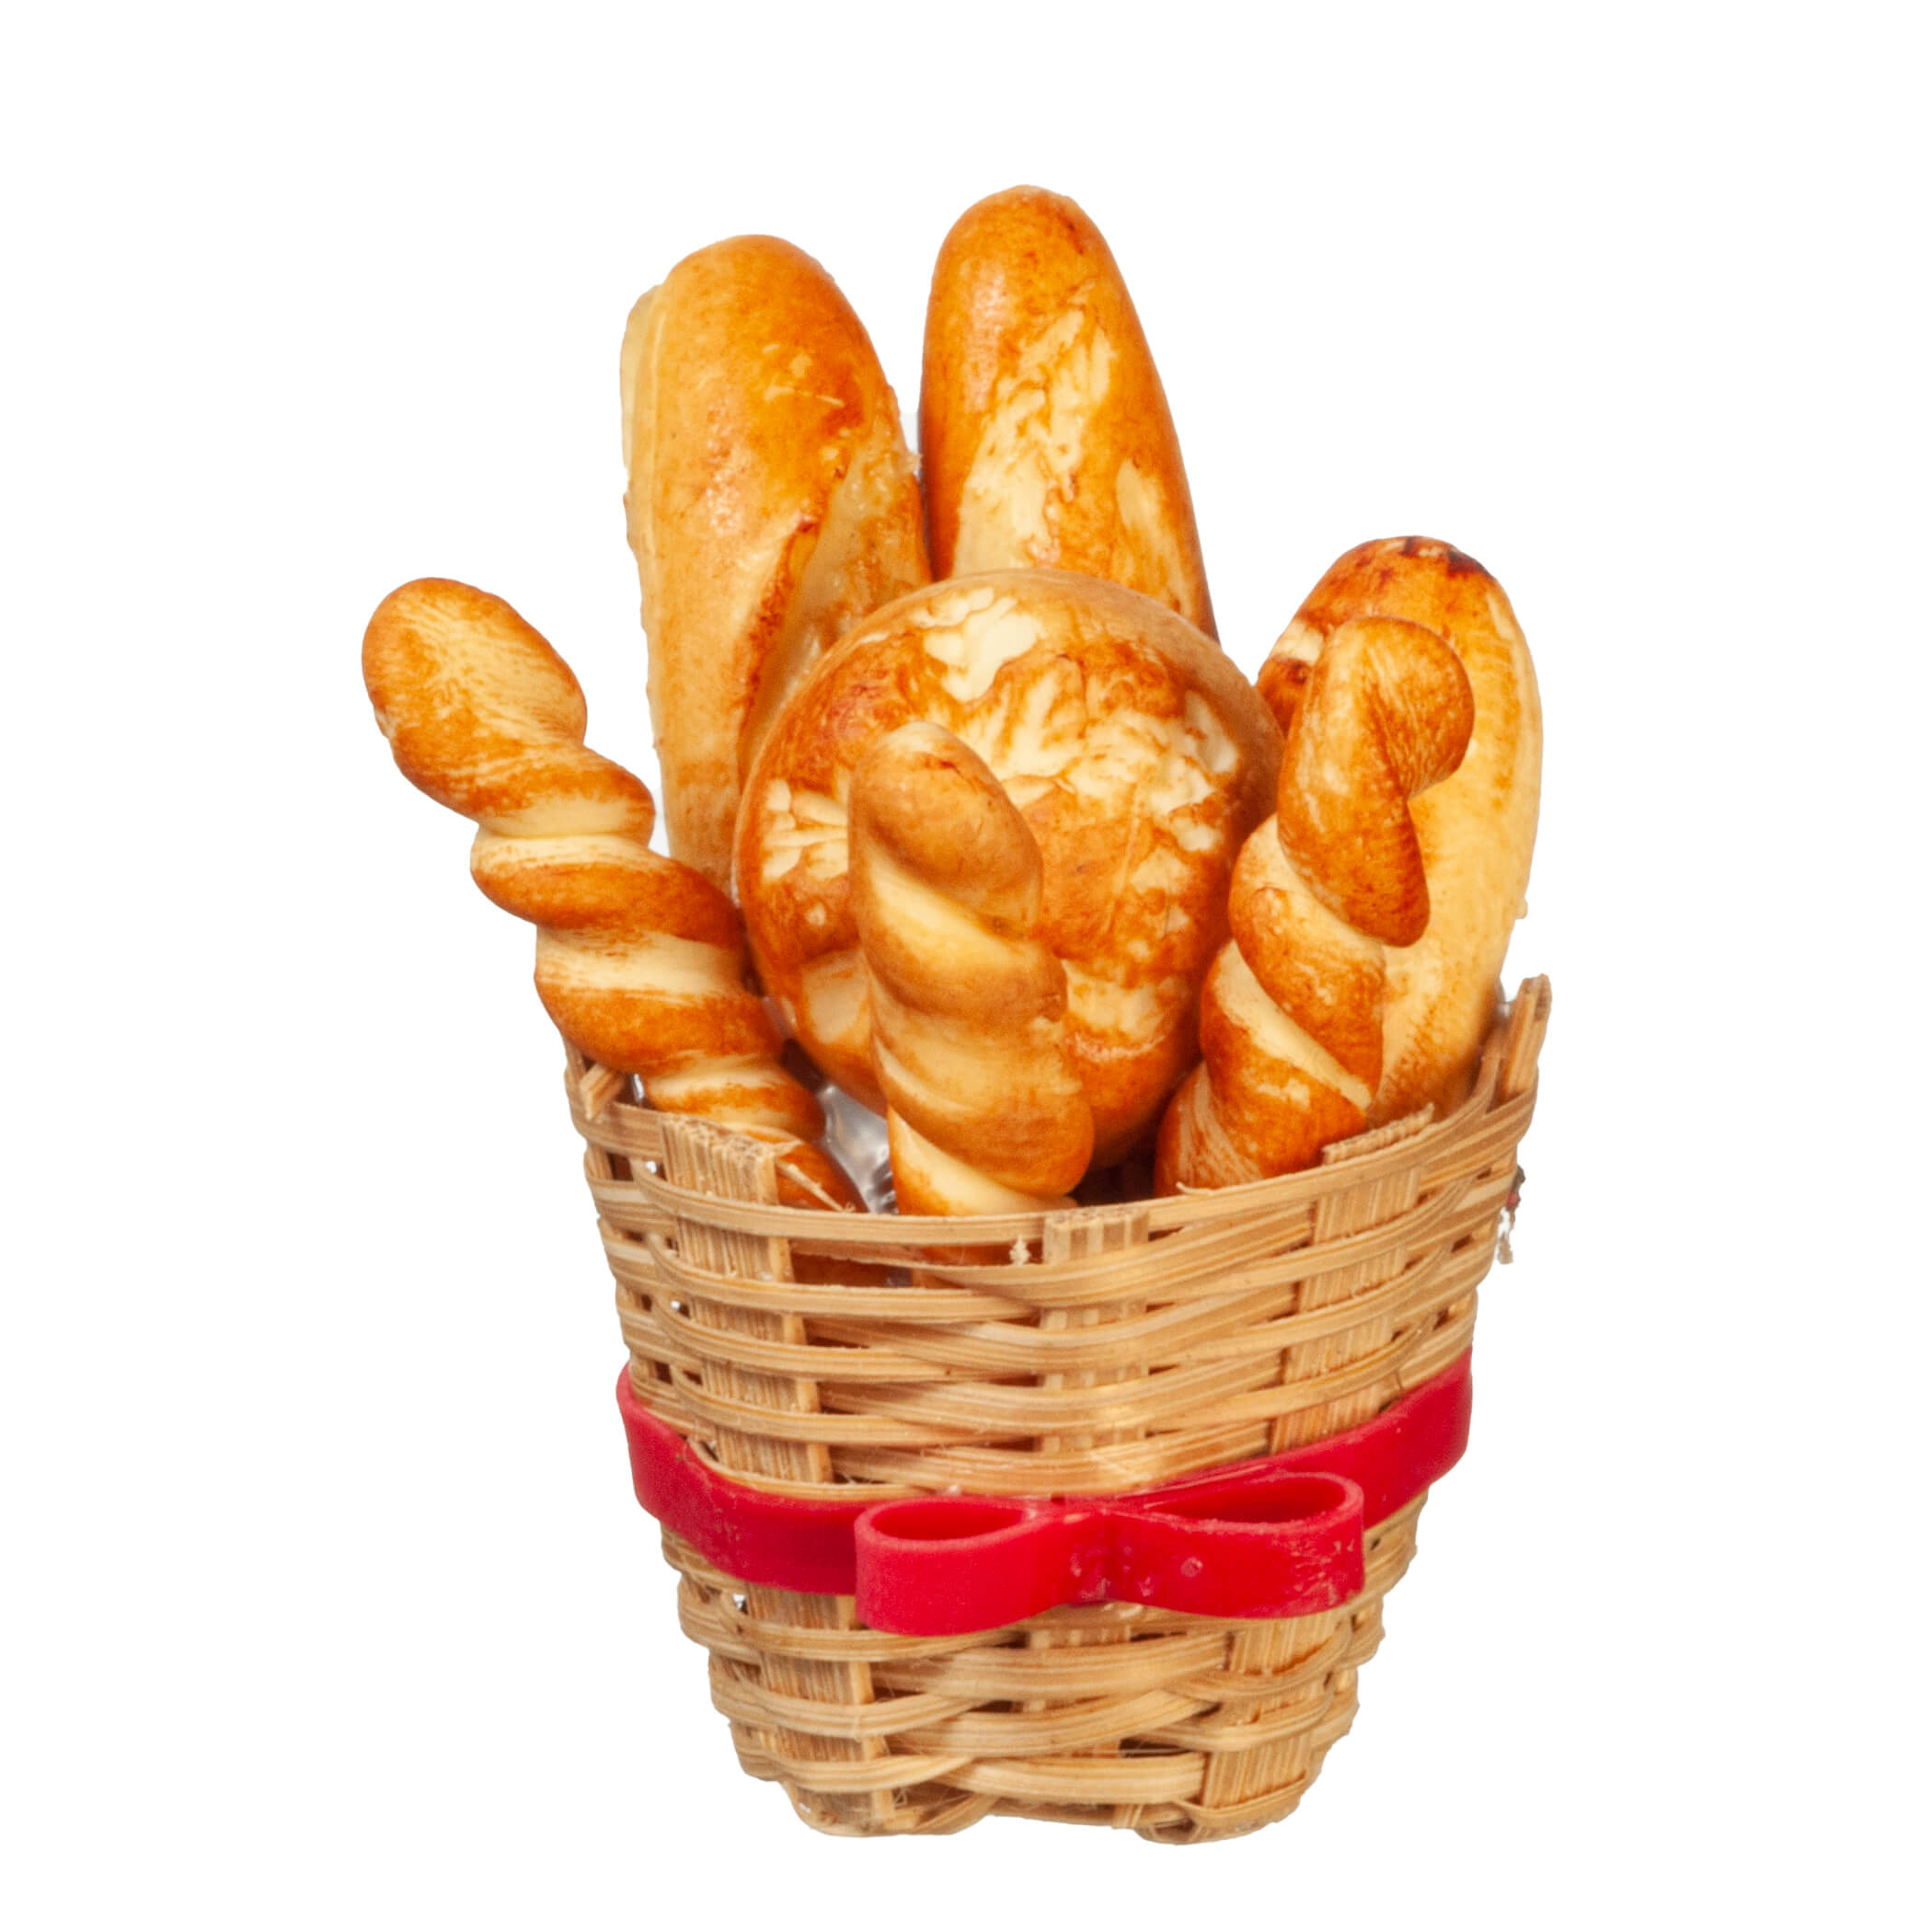 Breads in a Basket